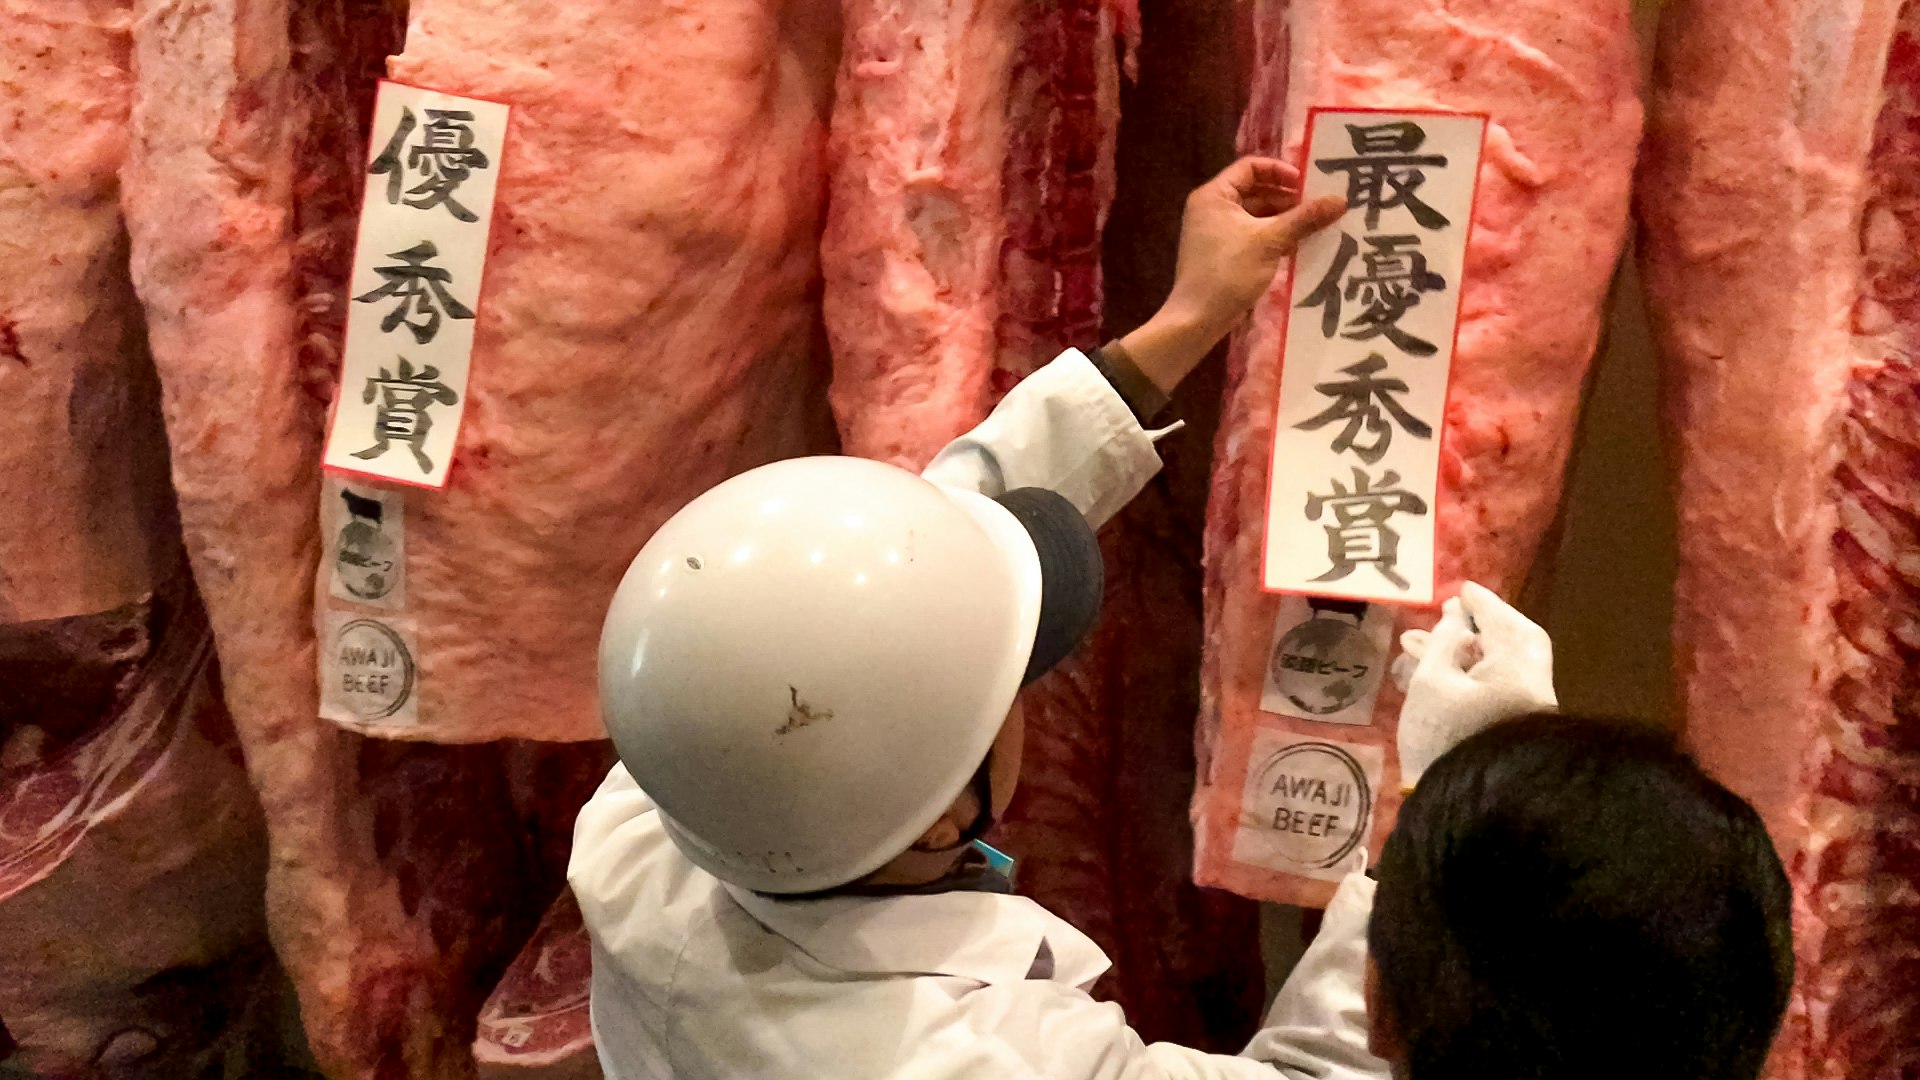 Awaji Beef A5 Wagyu Grand Prize